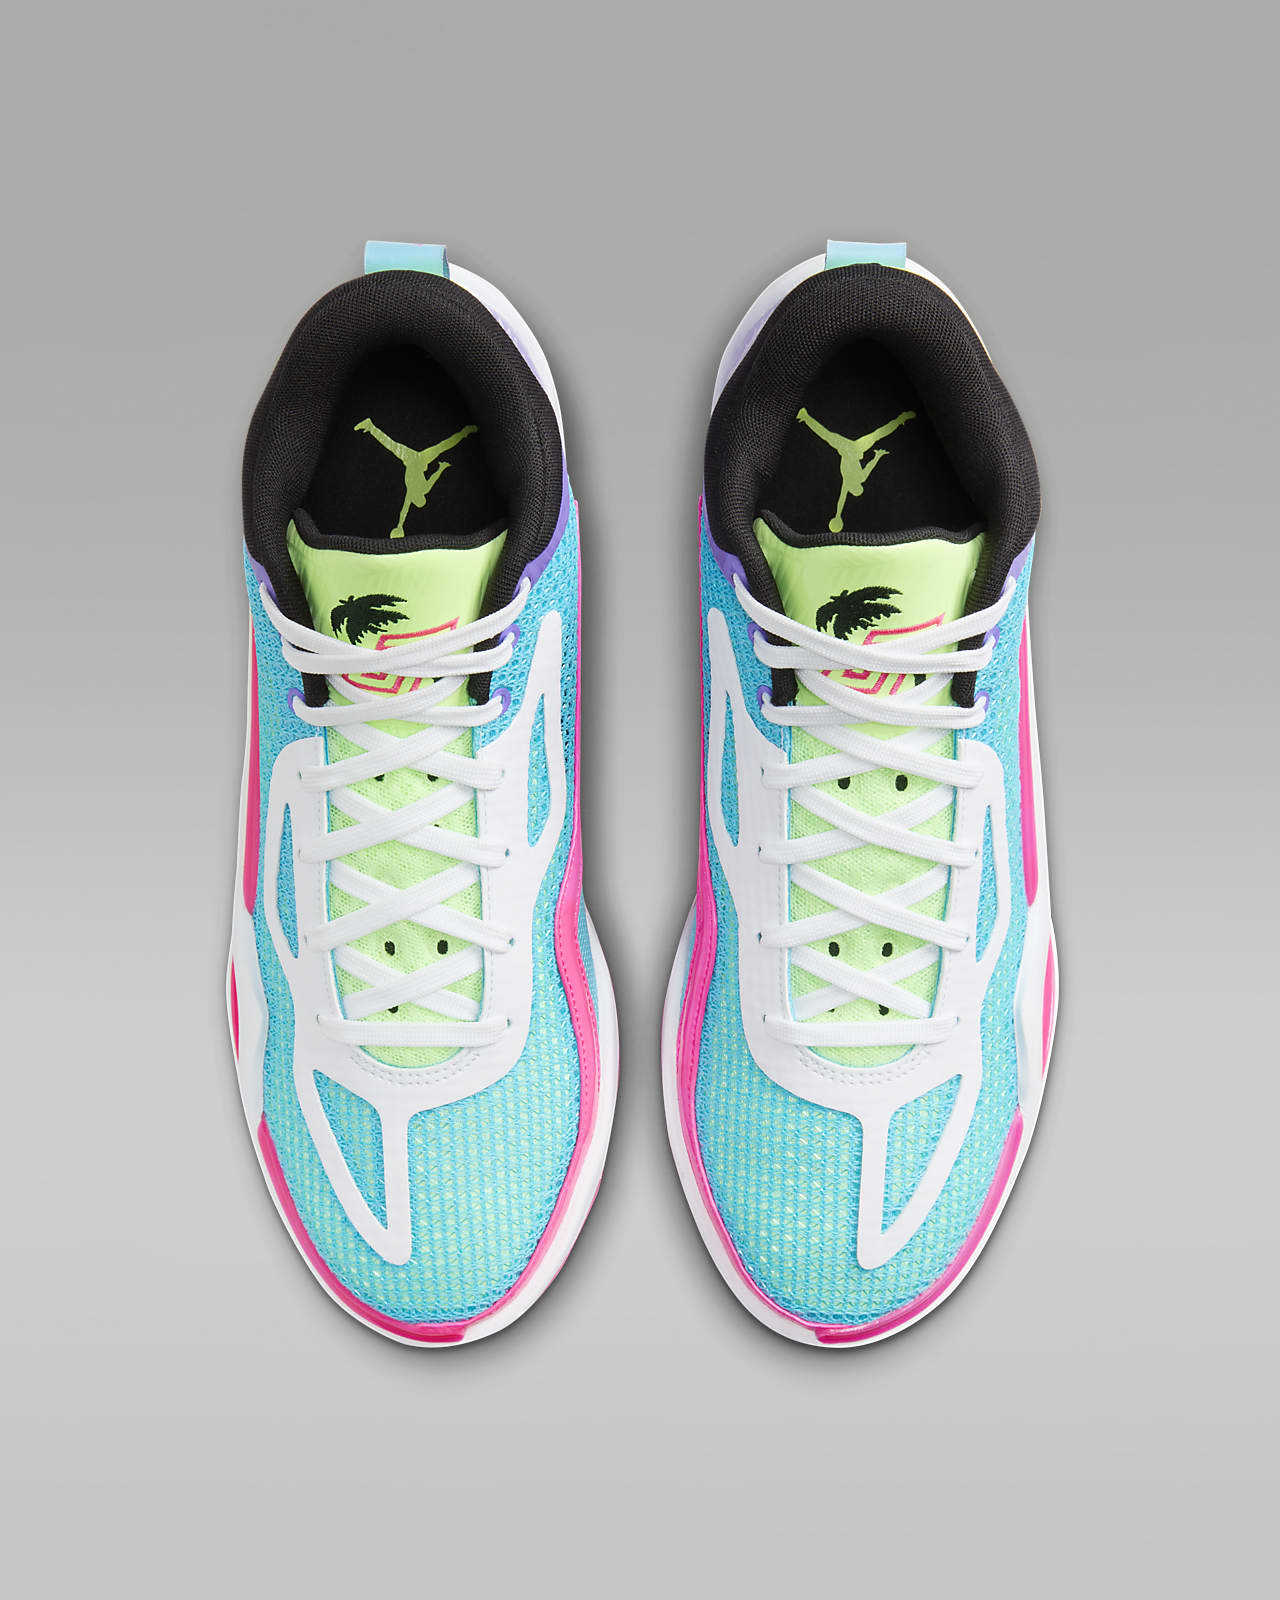 **$180** New Nike Air Jordan Tatum 1 “Archer Ave” aka “St. Louis